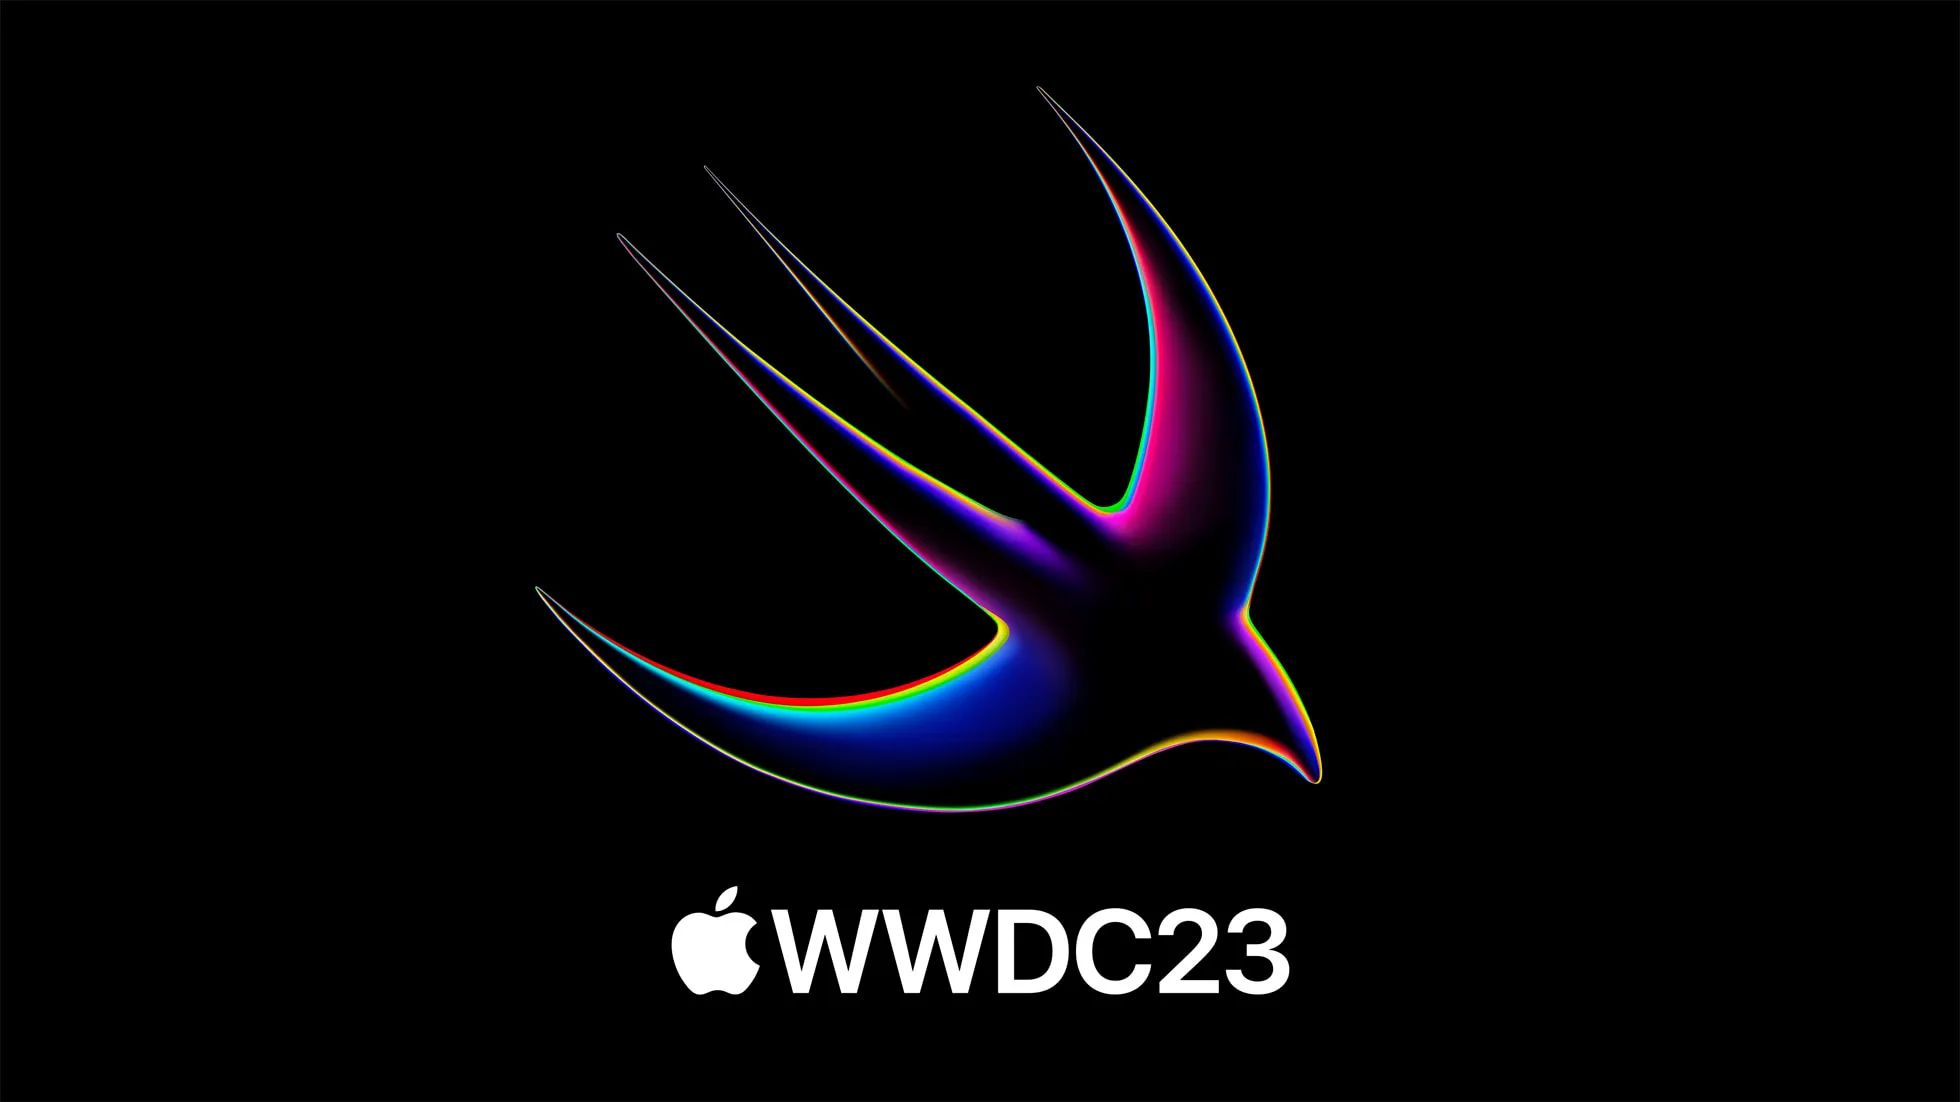 Apple-WWDC23-event-image